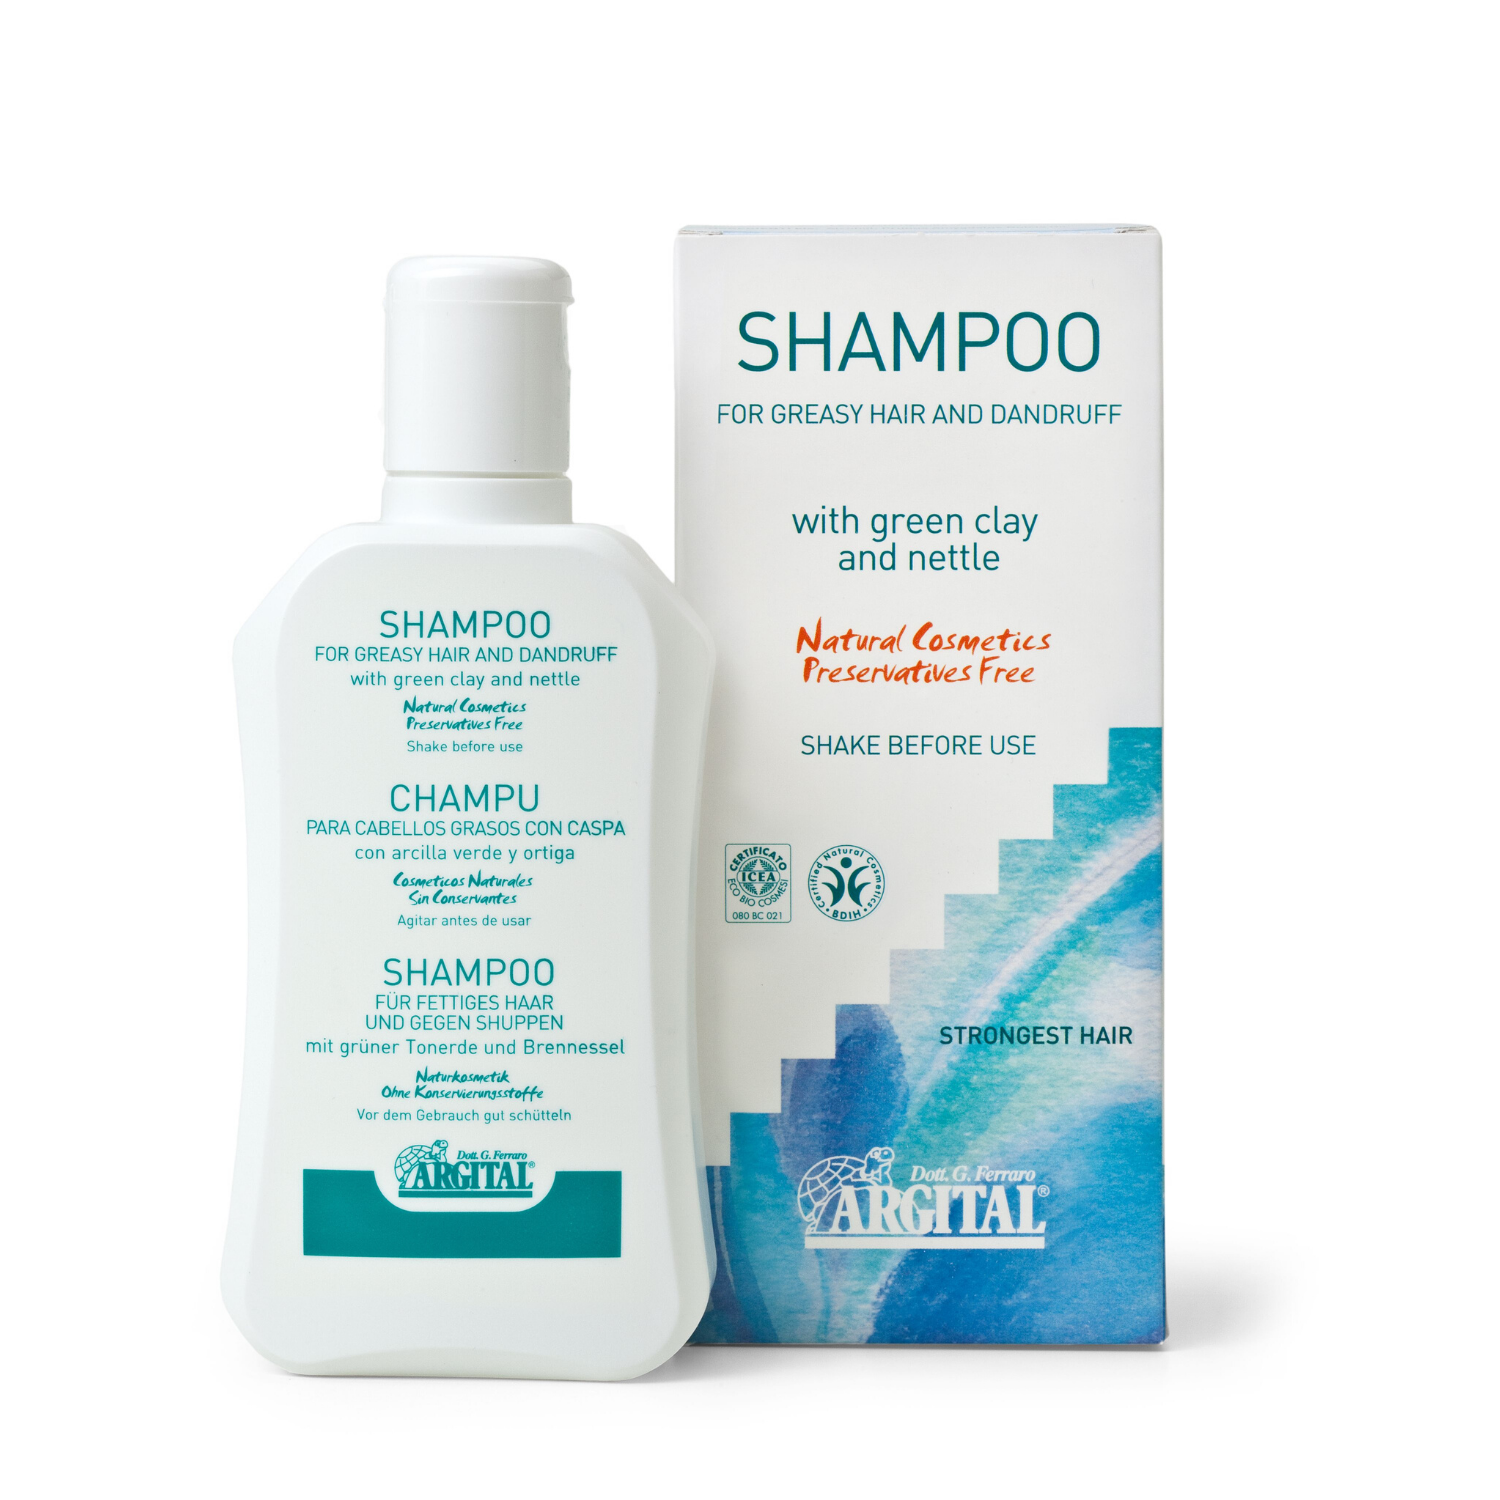 Shampoo for Oily Hair & Dandruff